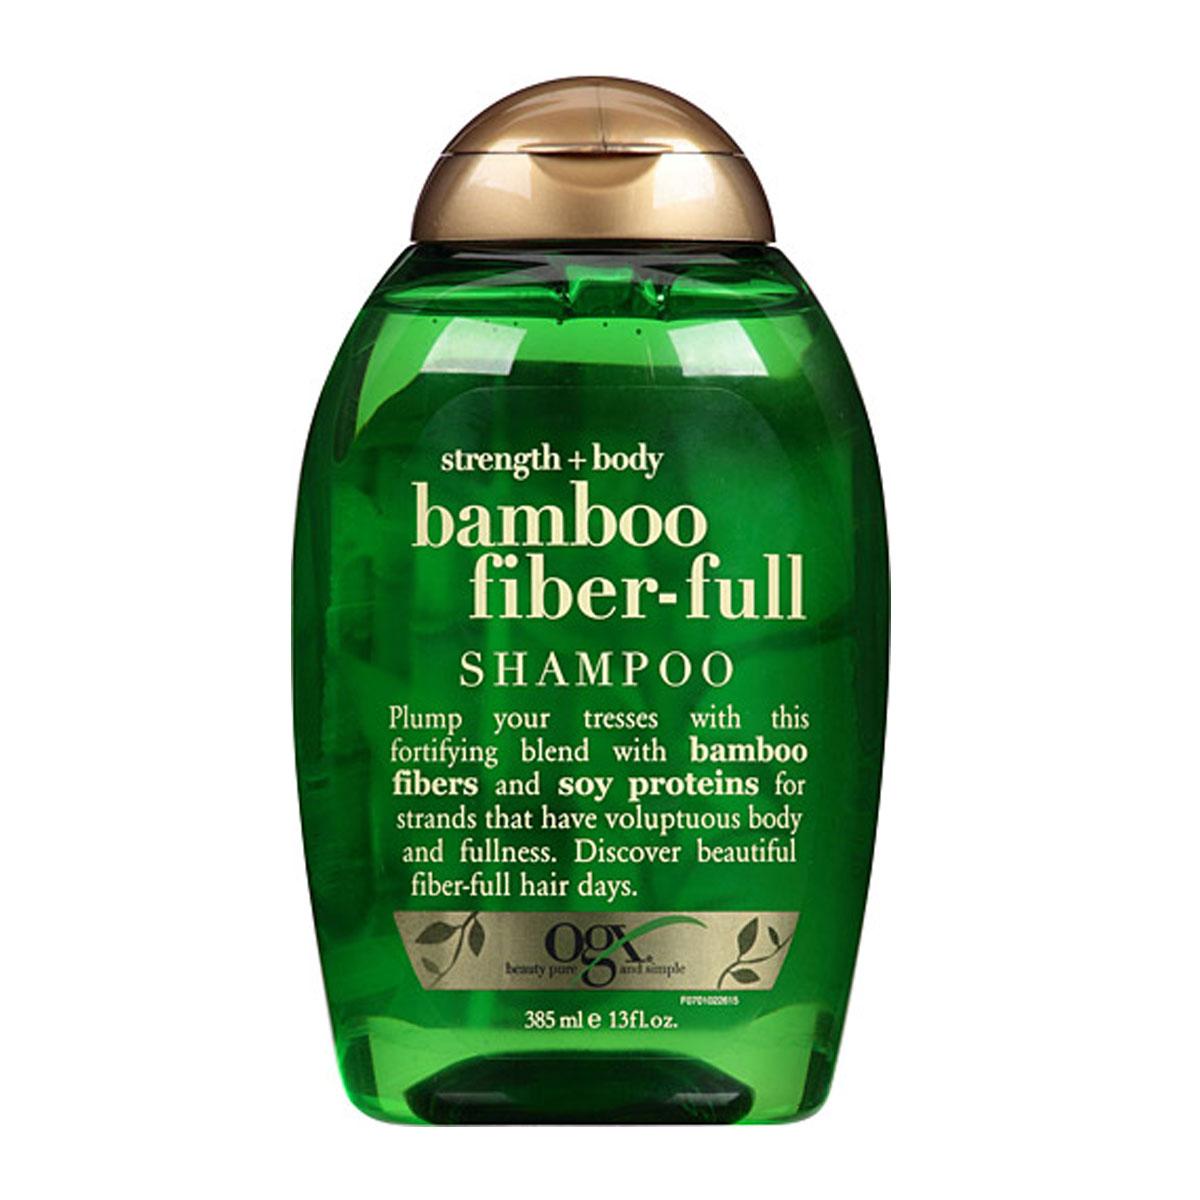 شامپو الیاف بامبو - bamboo fiber full shampoo